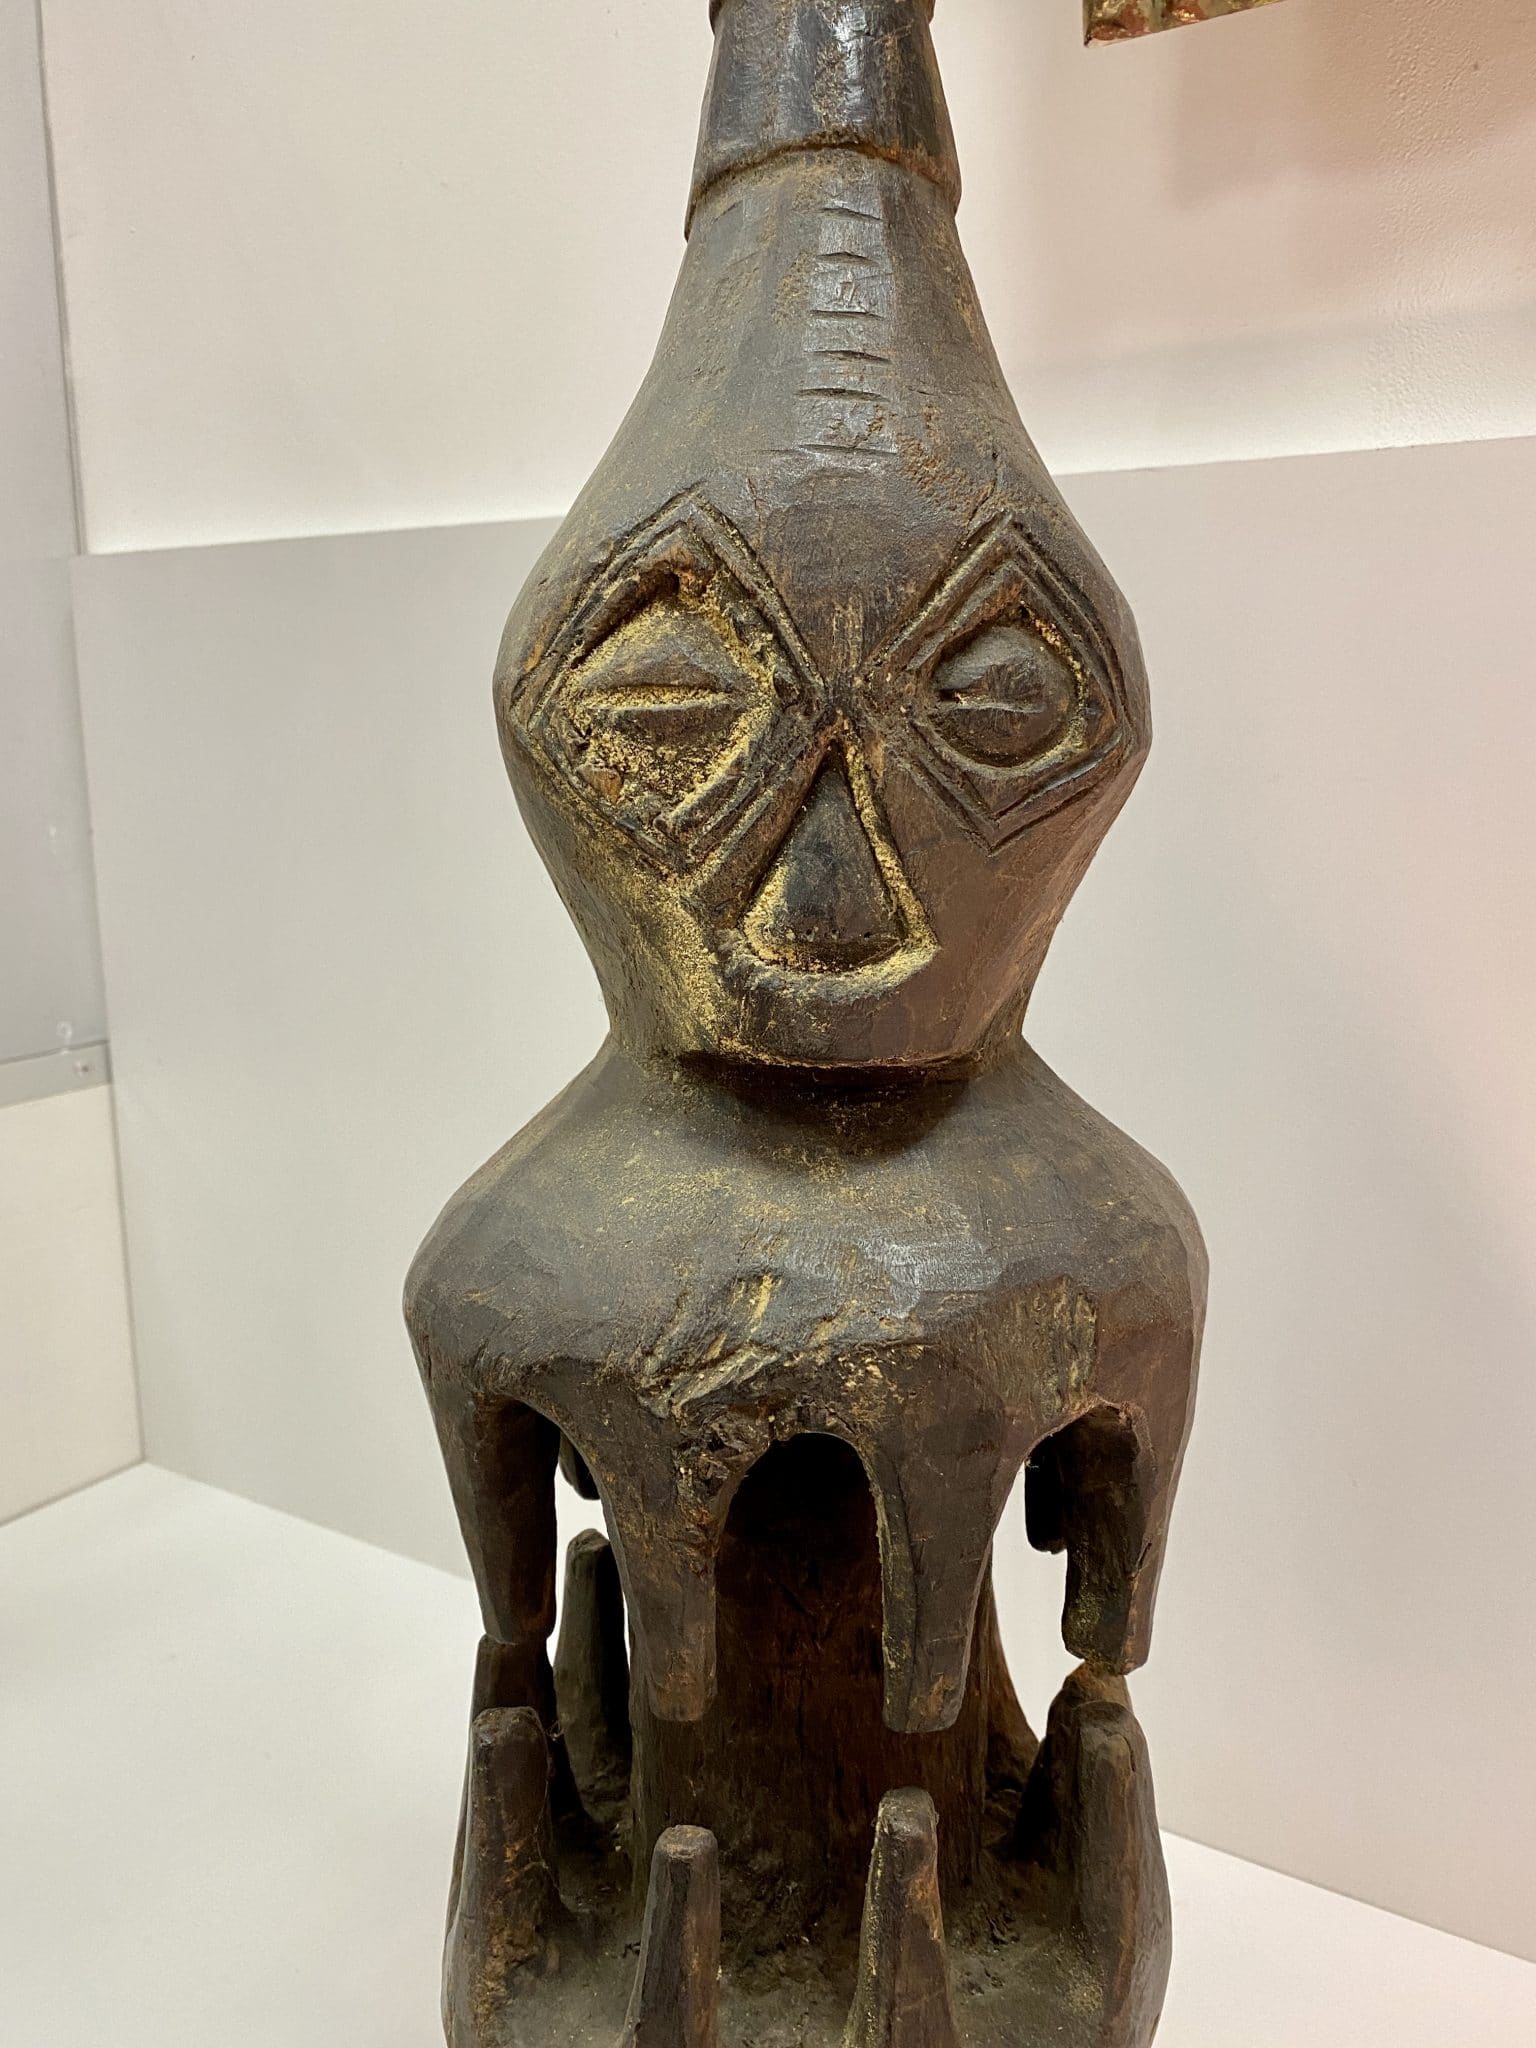 Sculpture Africaine